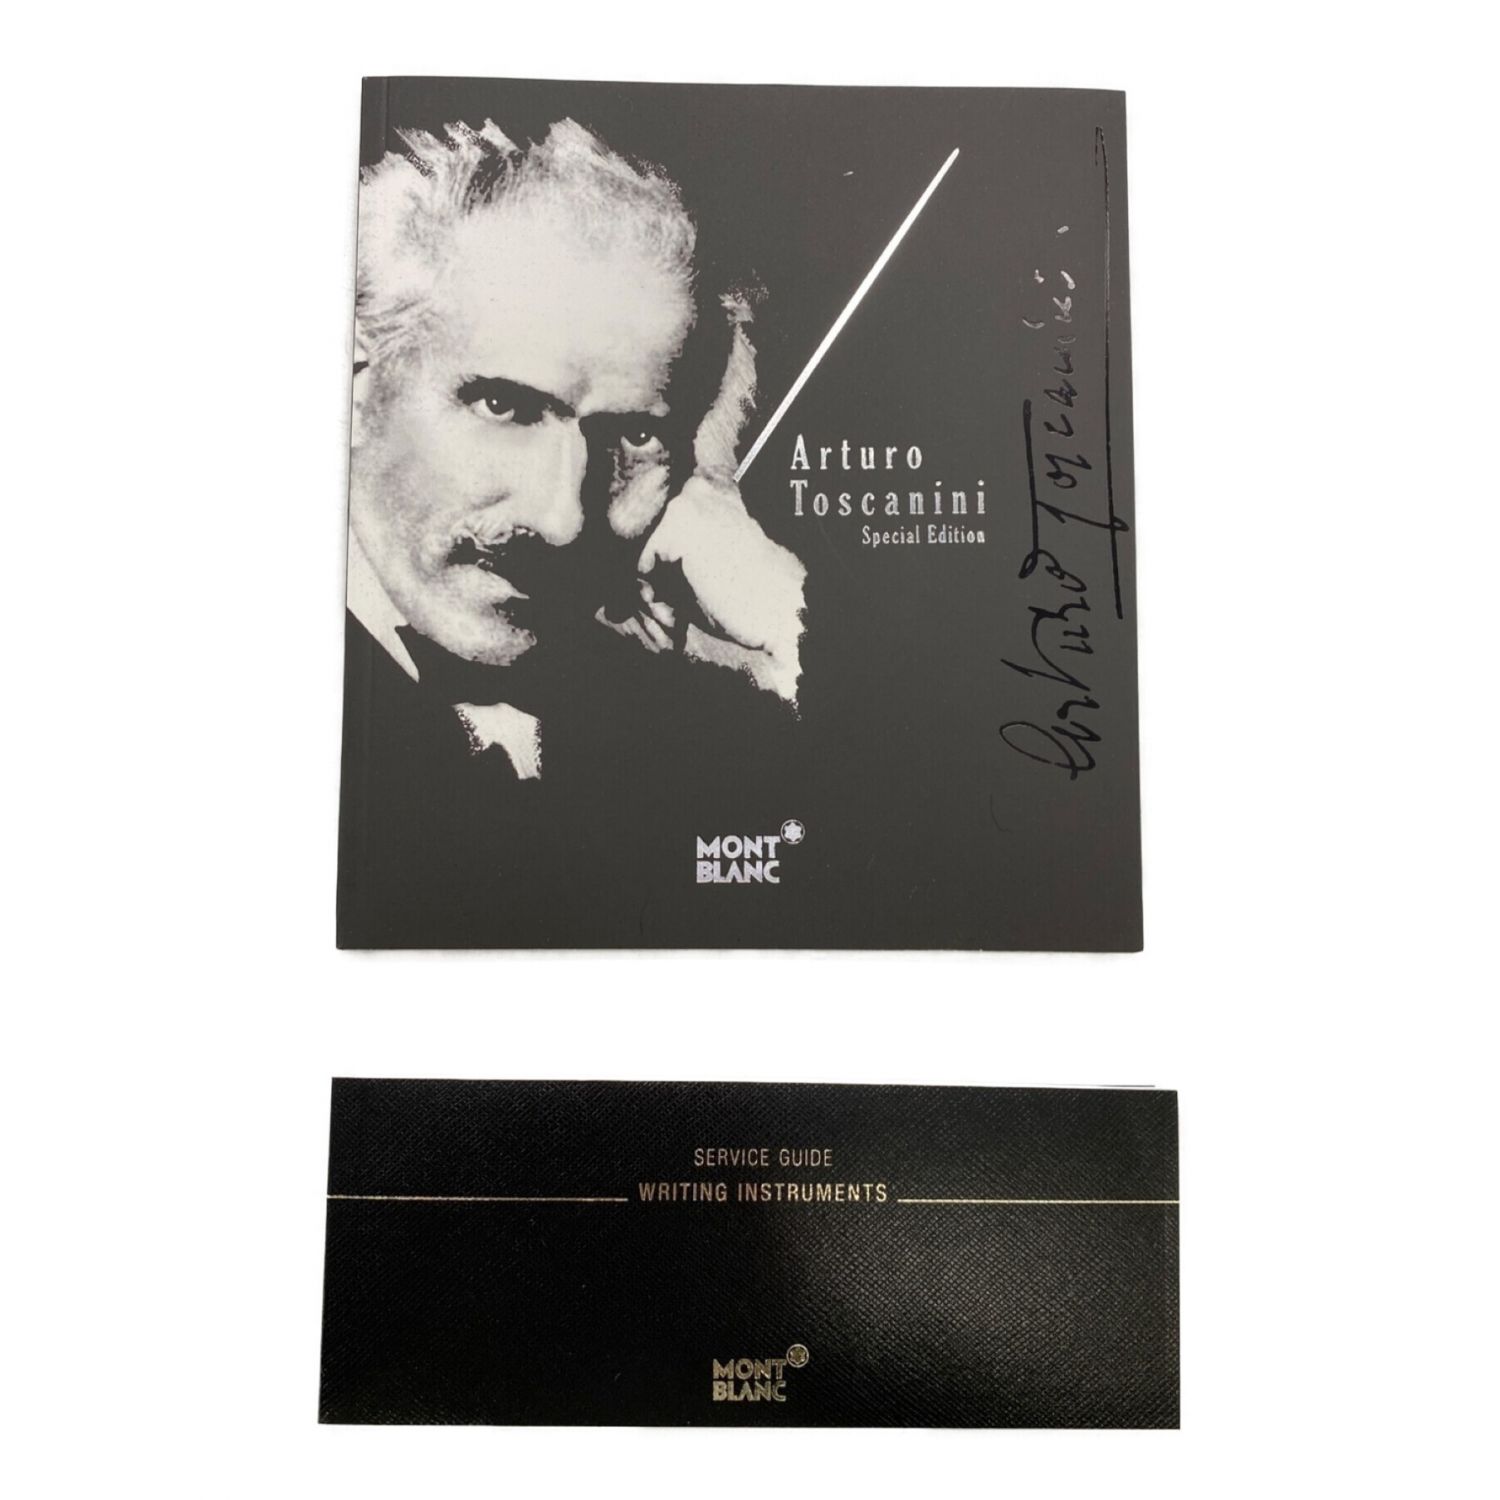 MONTBLANC (モンブラン) ドネーションペン Arturo Toscanini